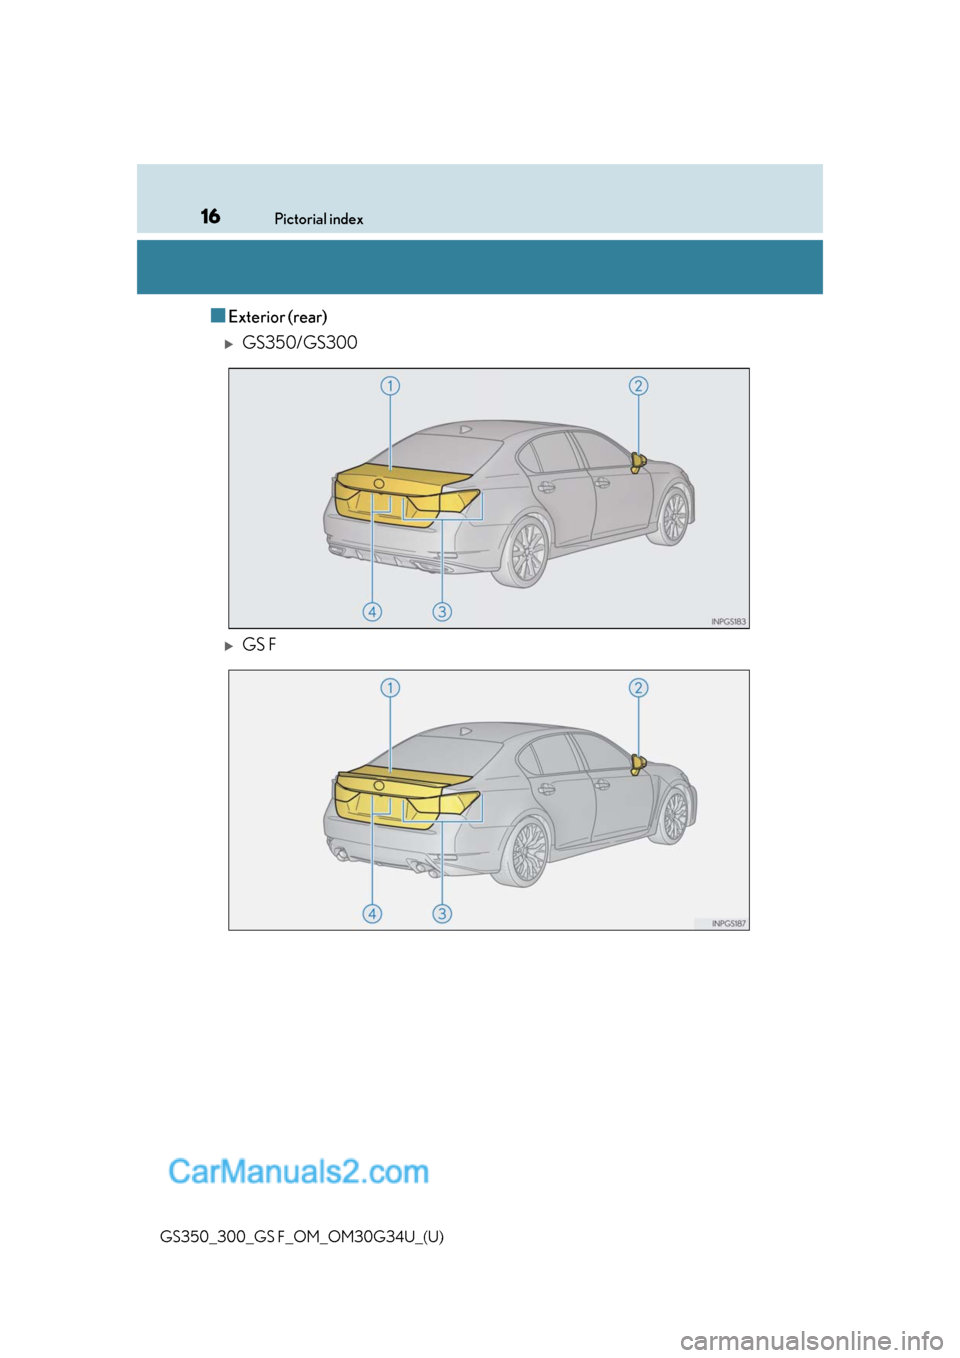 Lexus GS300 2018  s User Guide 16Pictorial index
GS350_300_GS F_OM_OM30G34U_(U)
■Exterior (rear)
GS350/GS300
GS F  